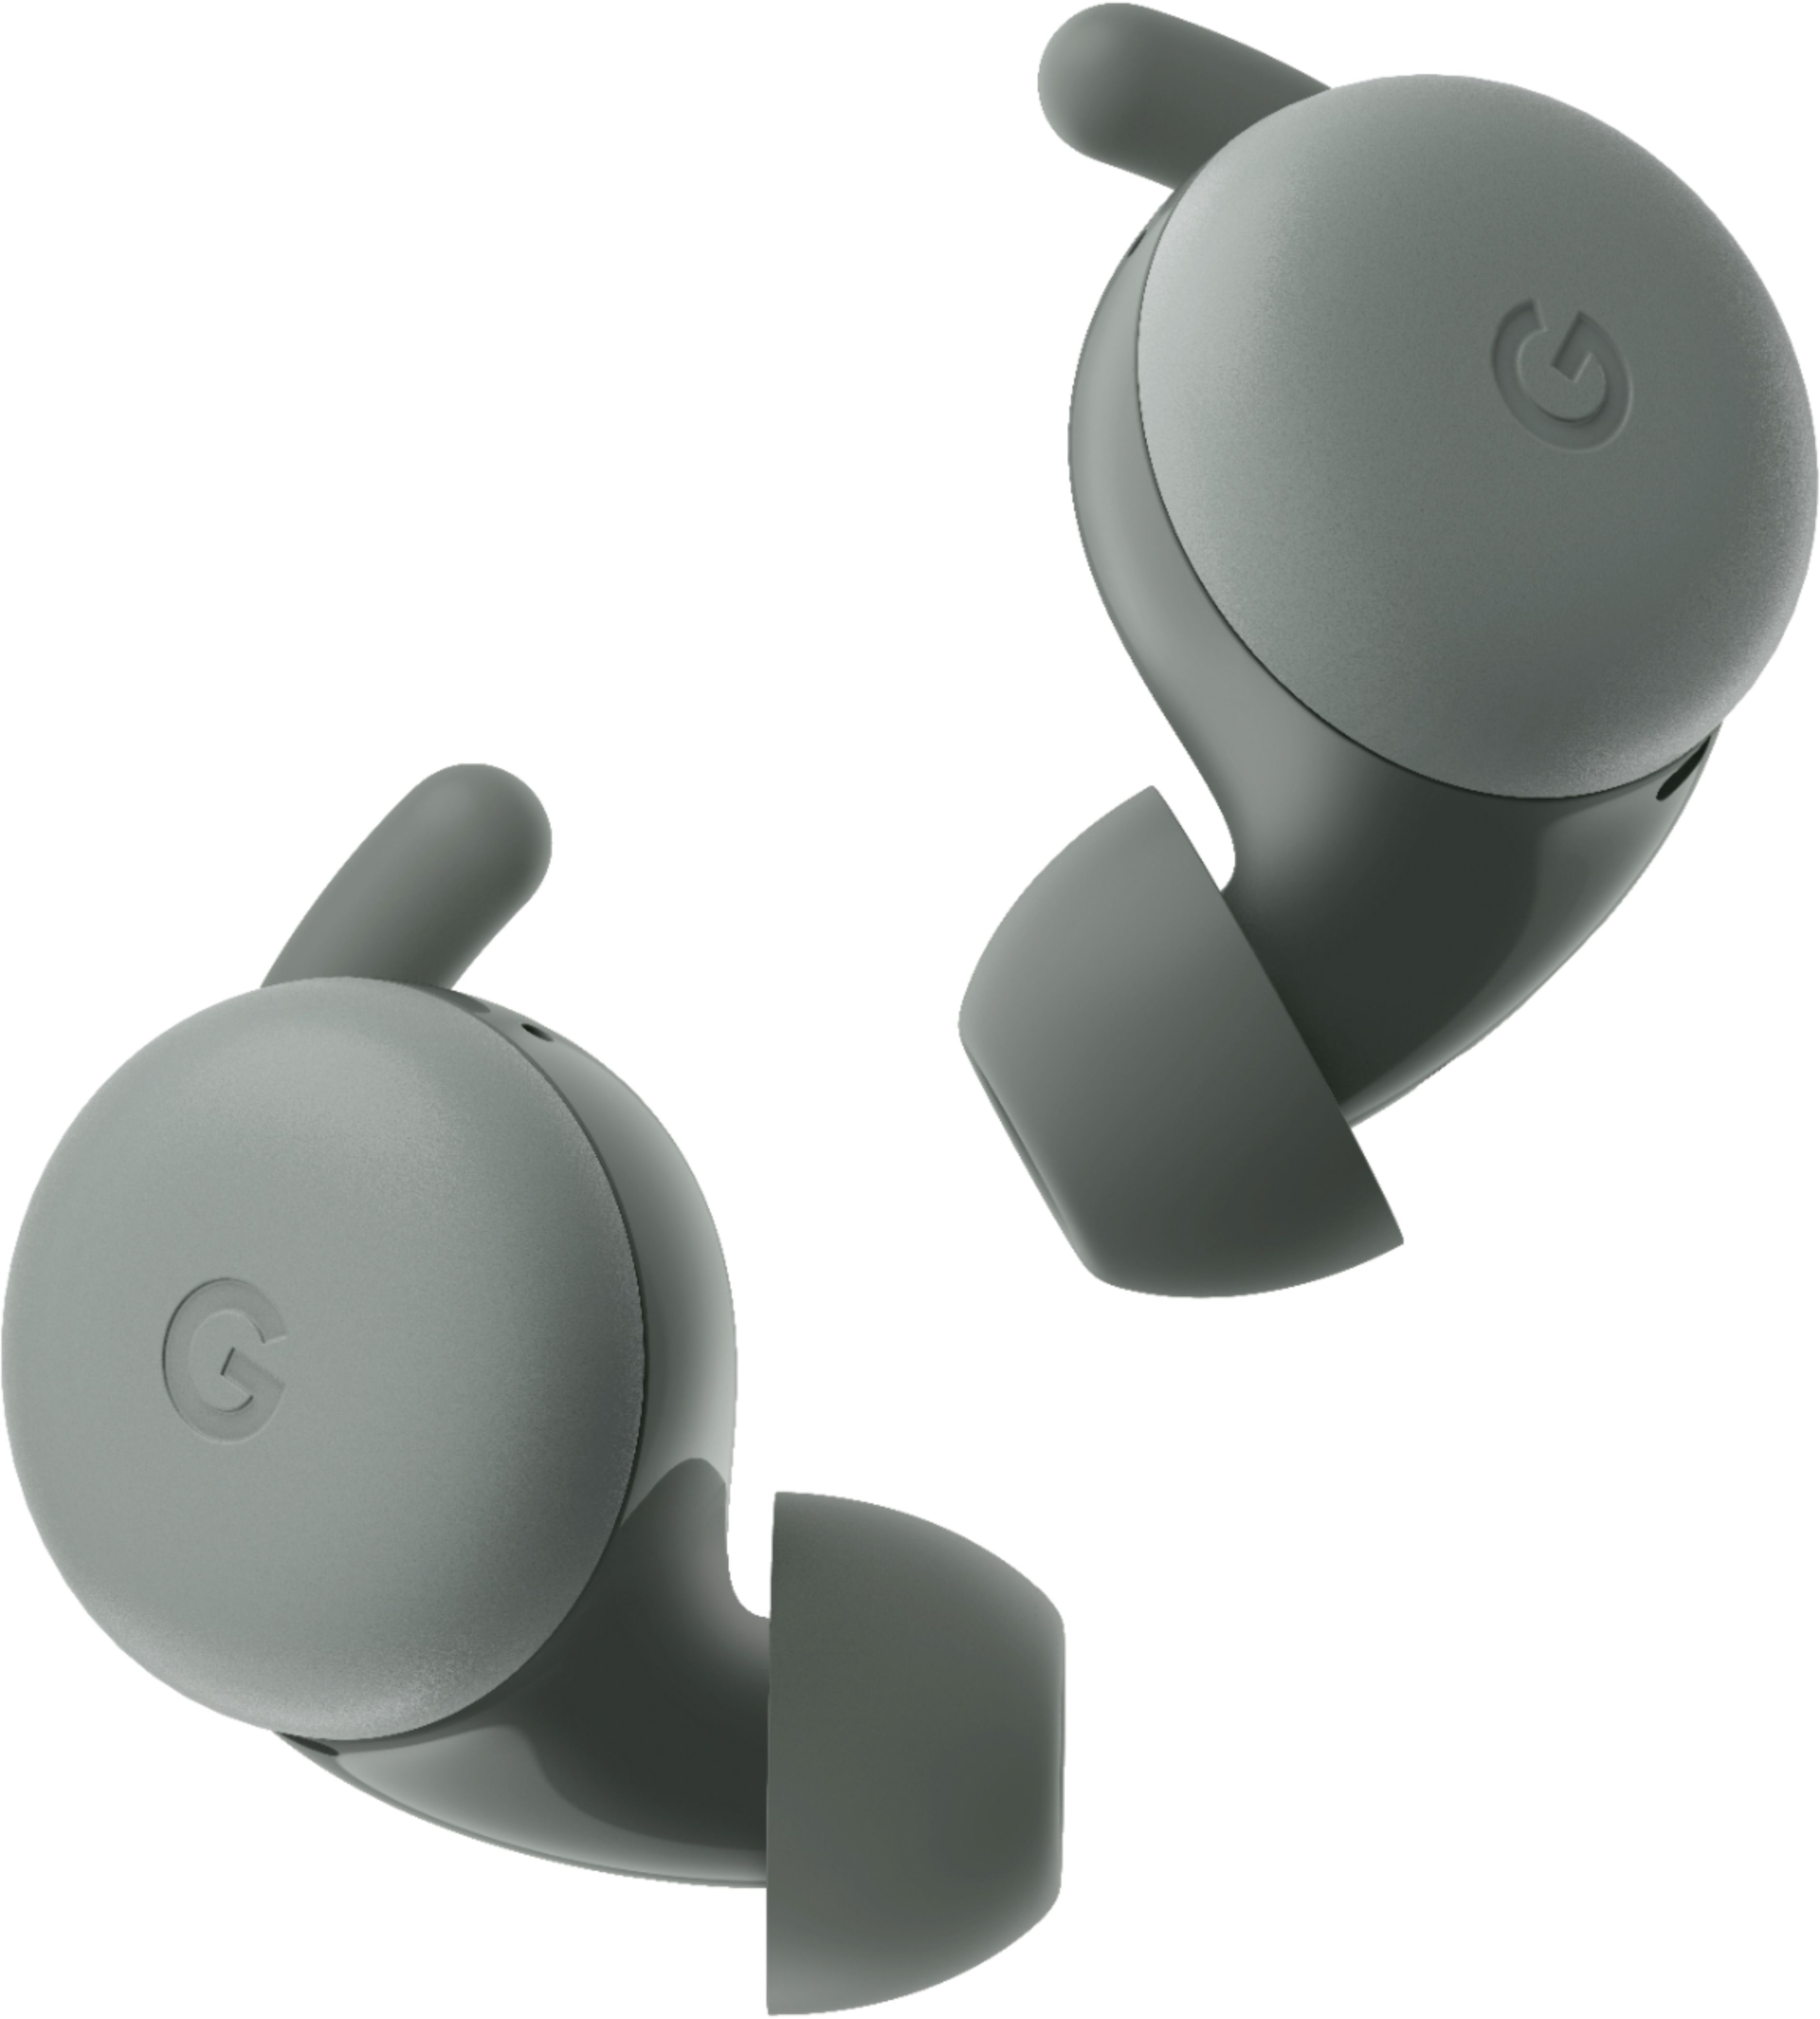 Google Pixel Buds Pro True Wireless Noise Cancelling Earbuds Coral  GA03202-US - Best Buy